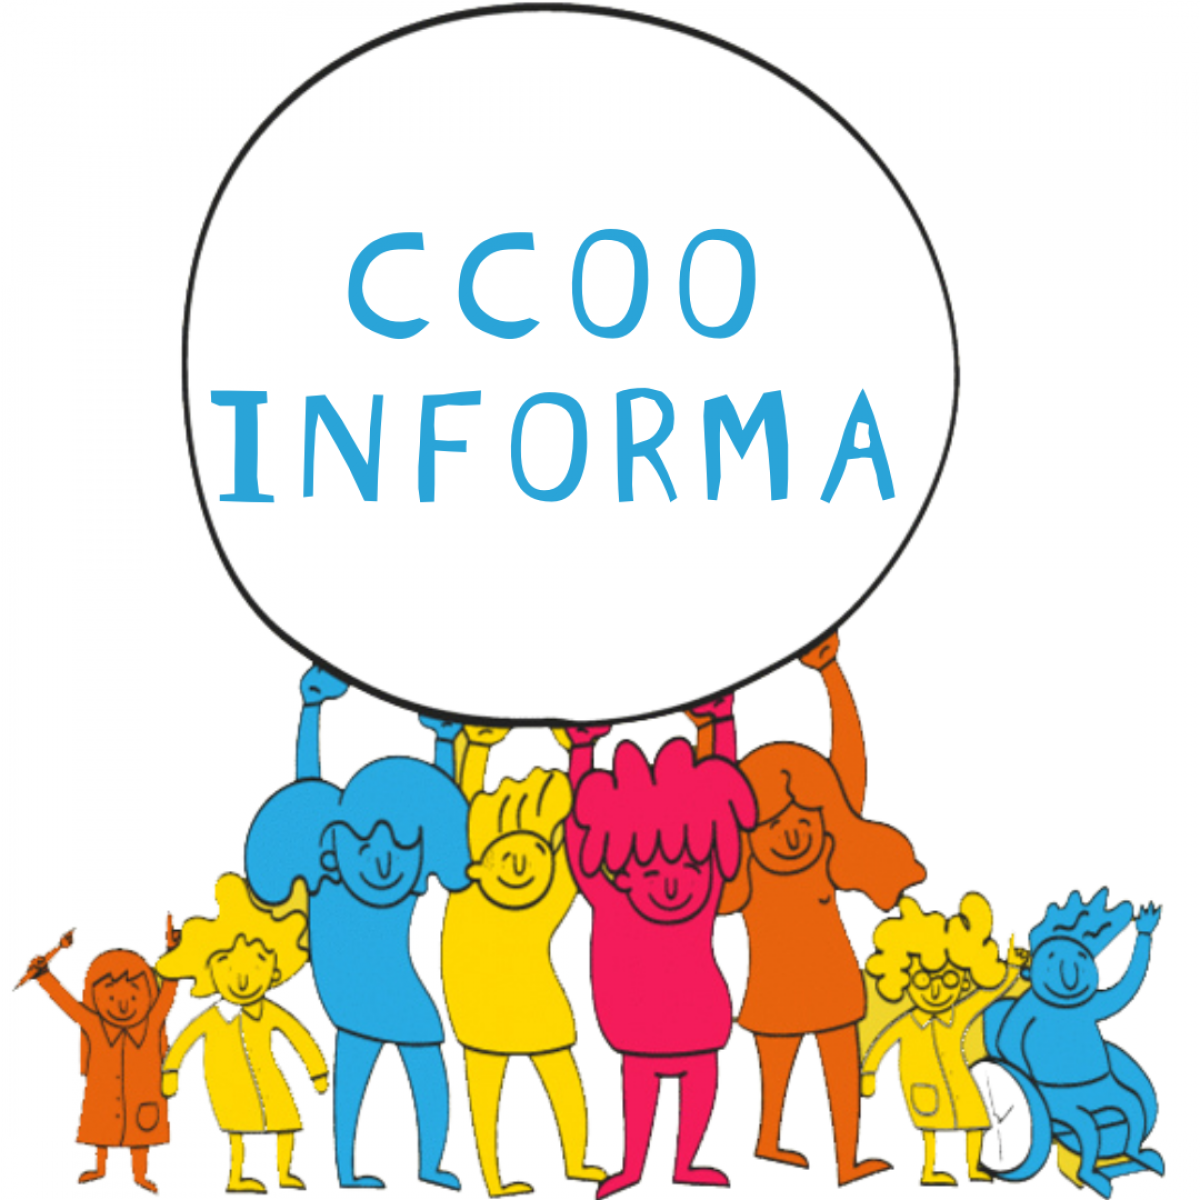 CCOO Informa